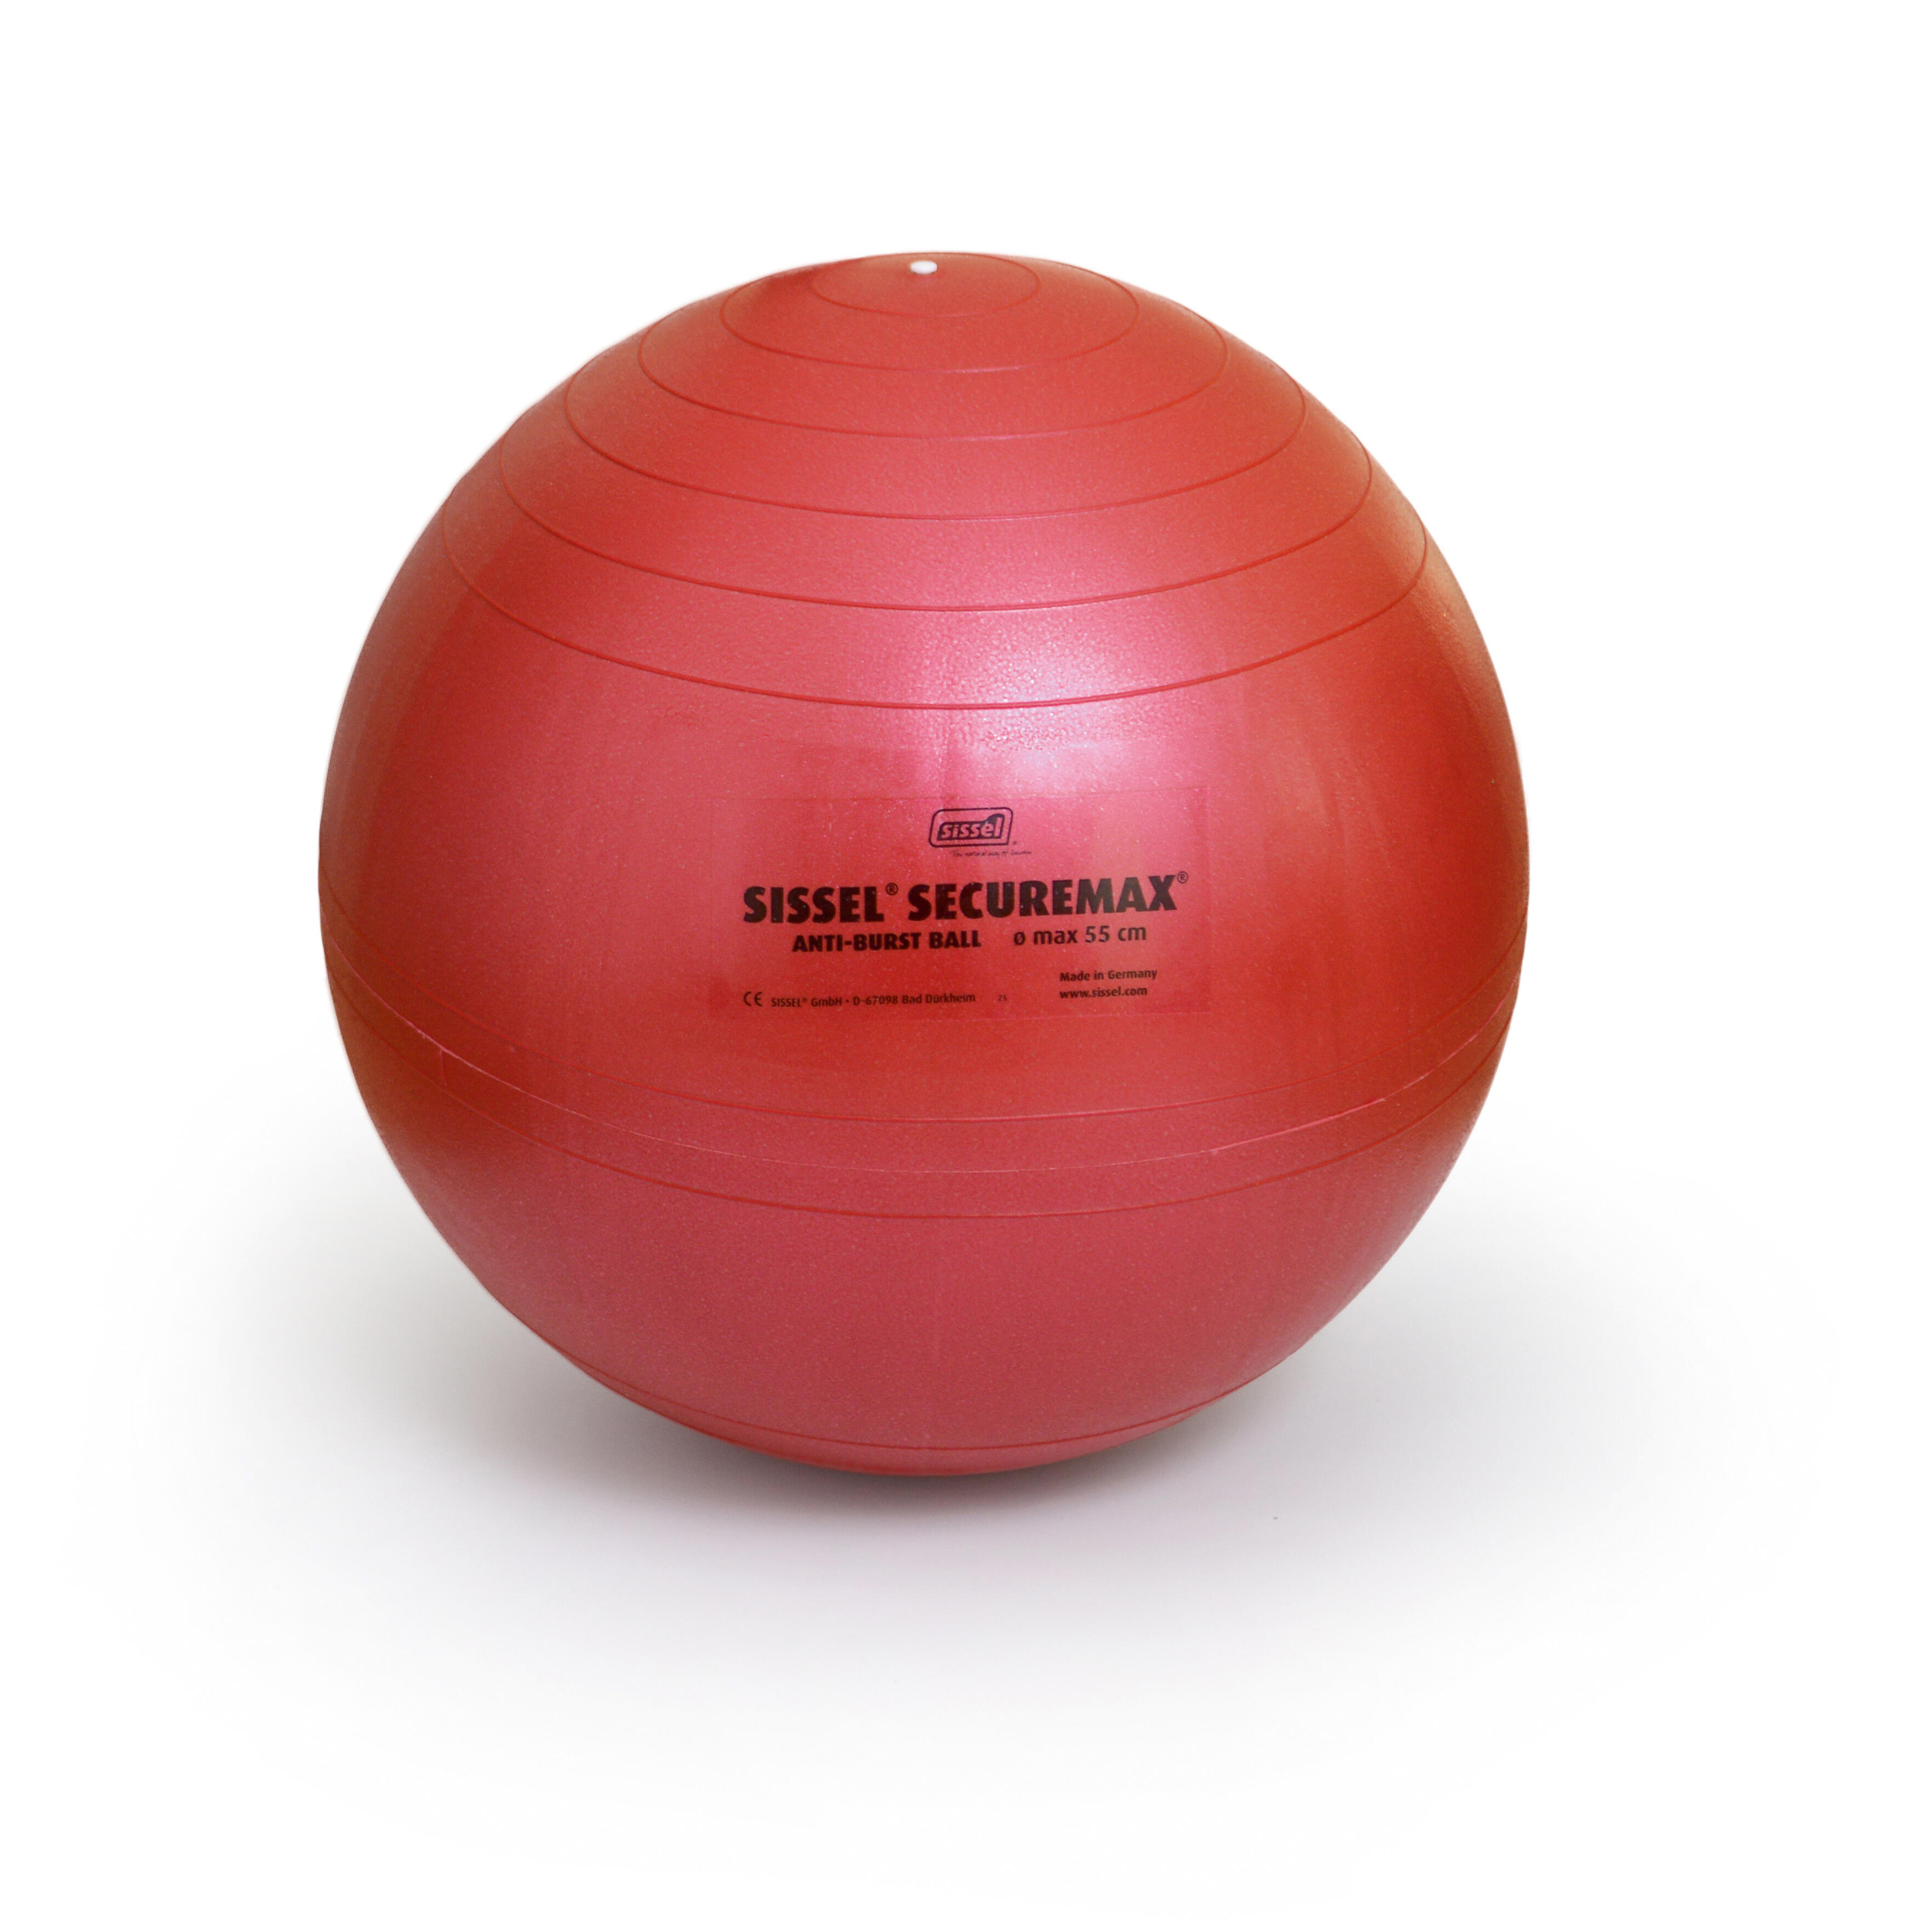 Minge gym ball SISSEL Mărimea 1 – 55 cm Roz decathlon.ro  Accesorii fitness cardio